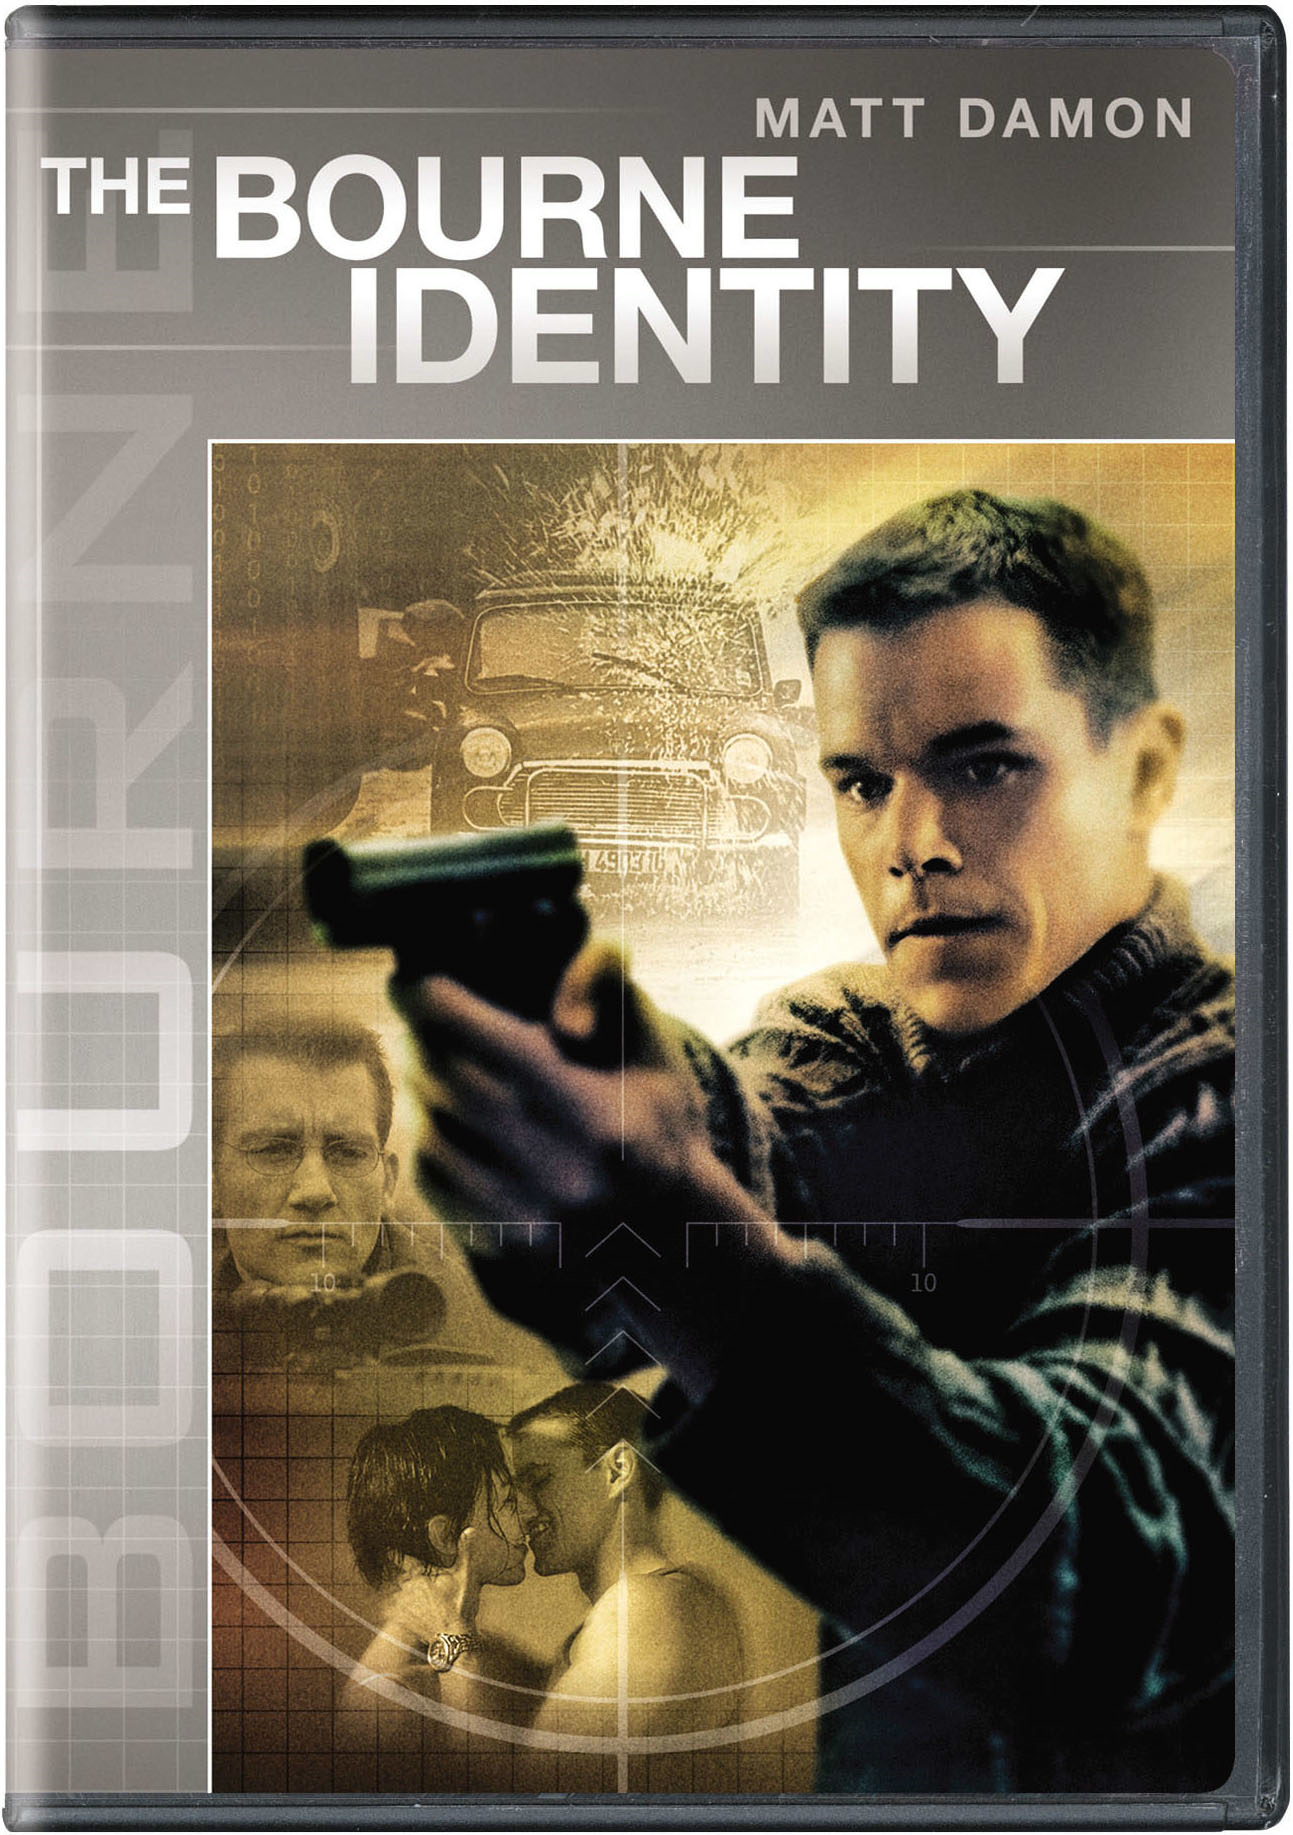 The Bourne Identity (DVD New Box Art) - DVD [ 2002 ]  - Thriller Movies On DVD - Movies On GRUV